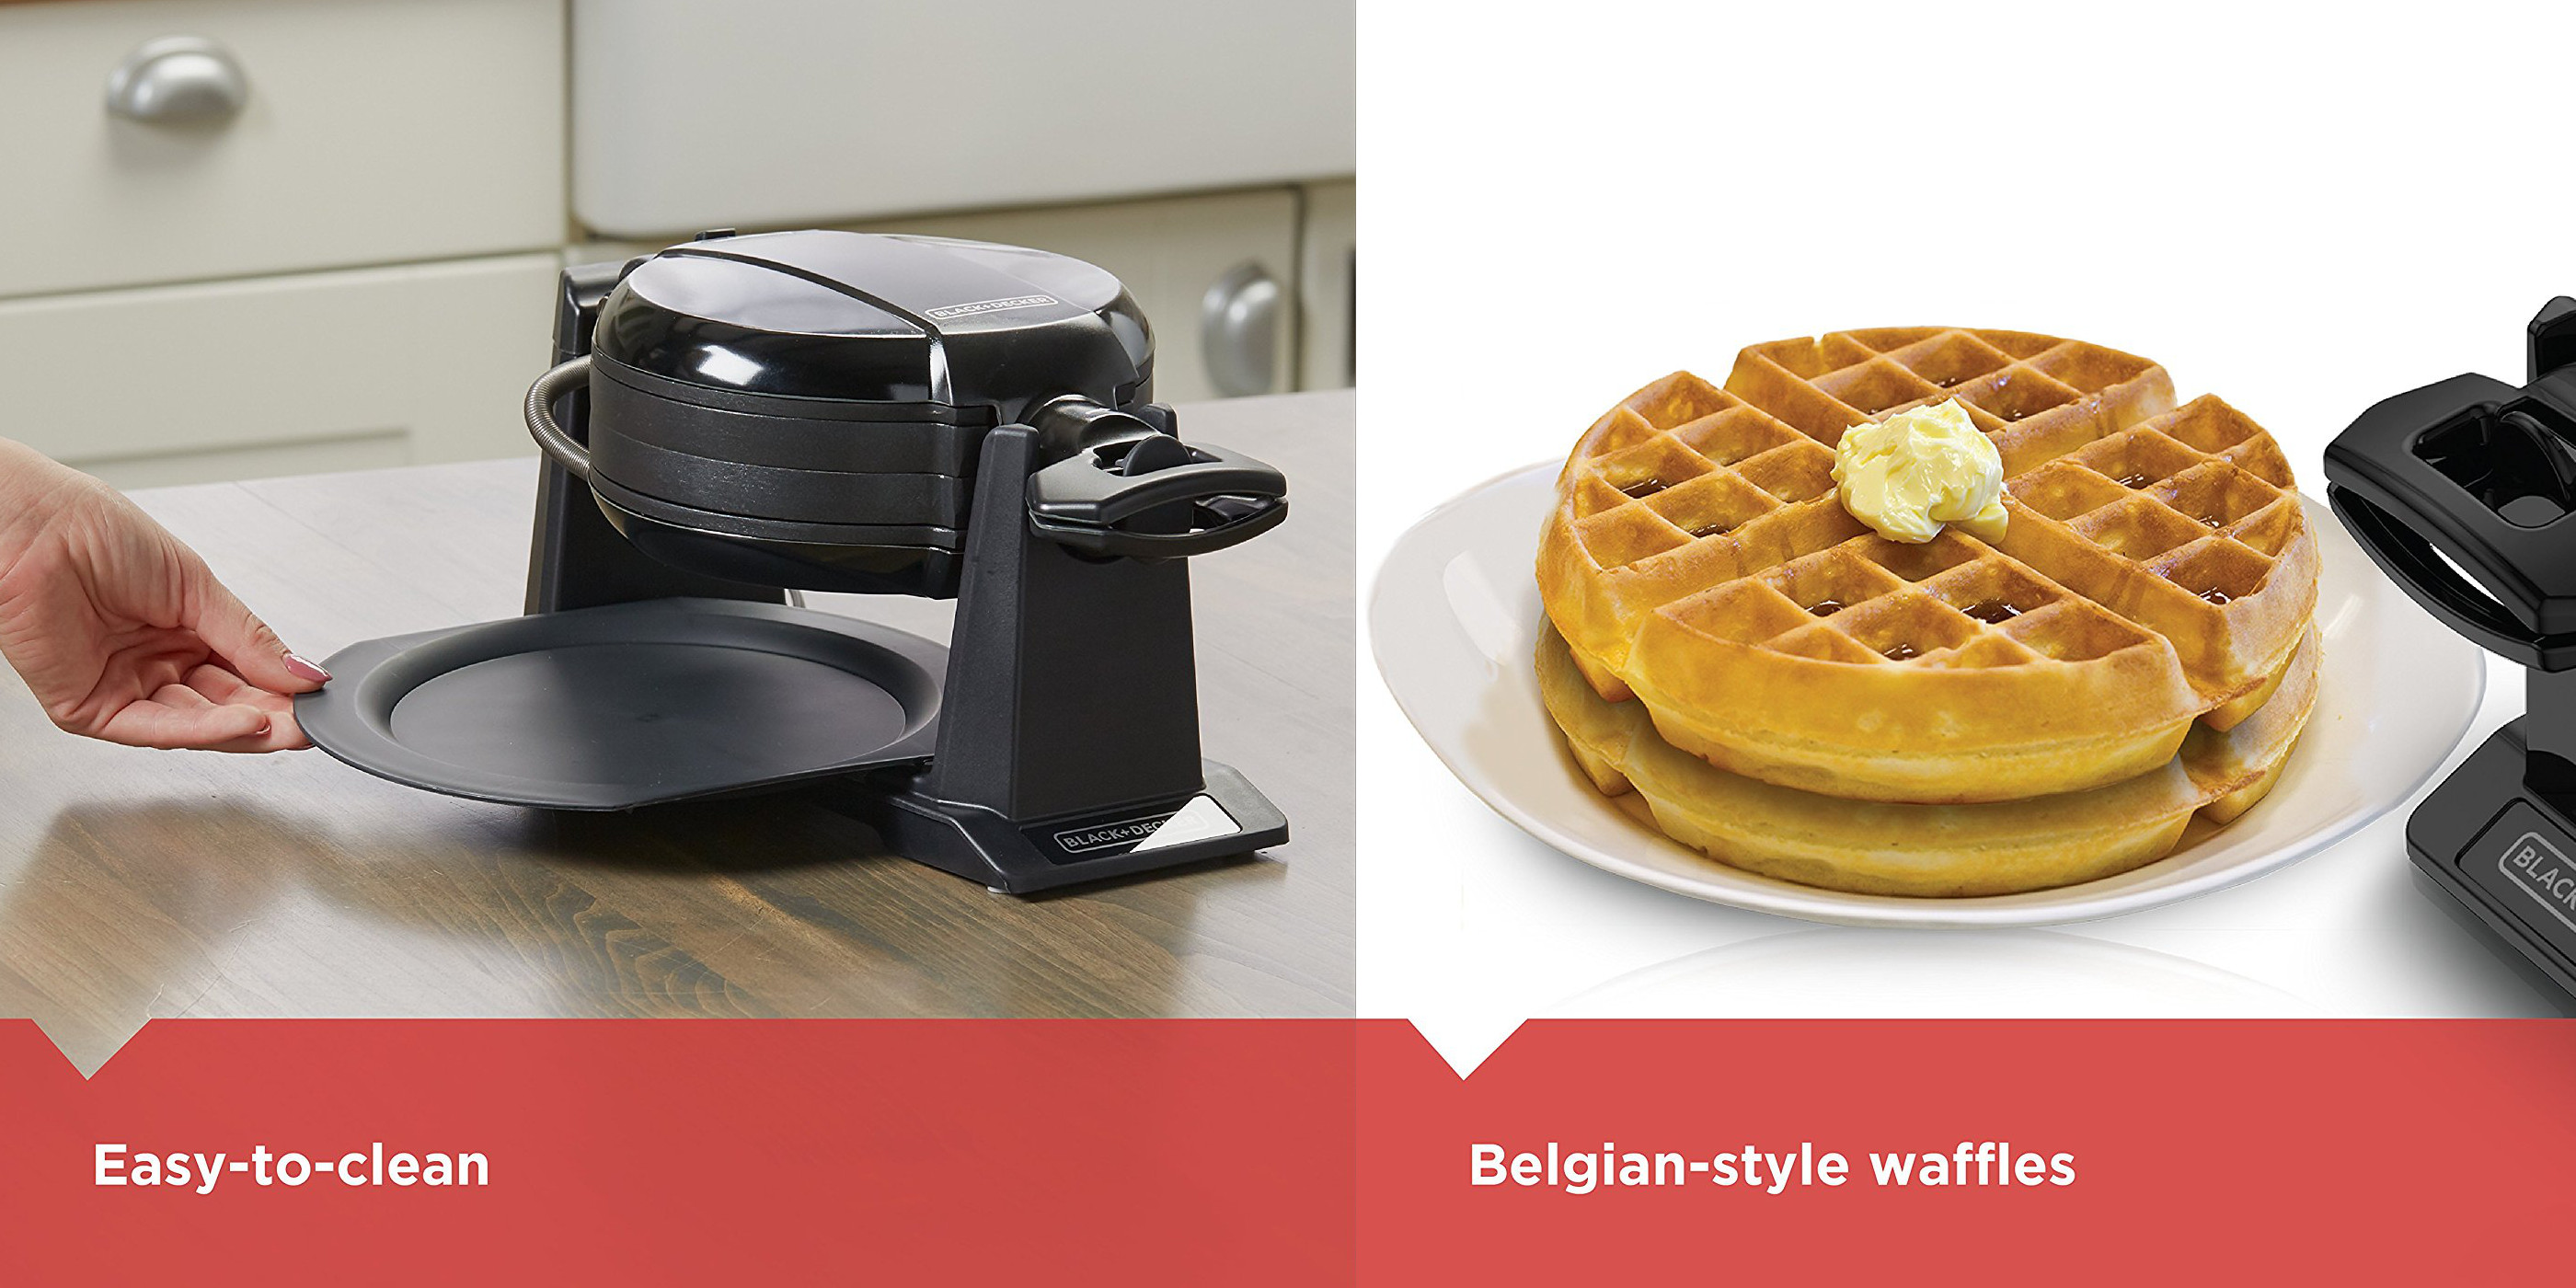 https://9to5toys.com/wp-content/uploads/sites/5/2018/05/blackdecker-rotating-waffle-maker.jpg